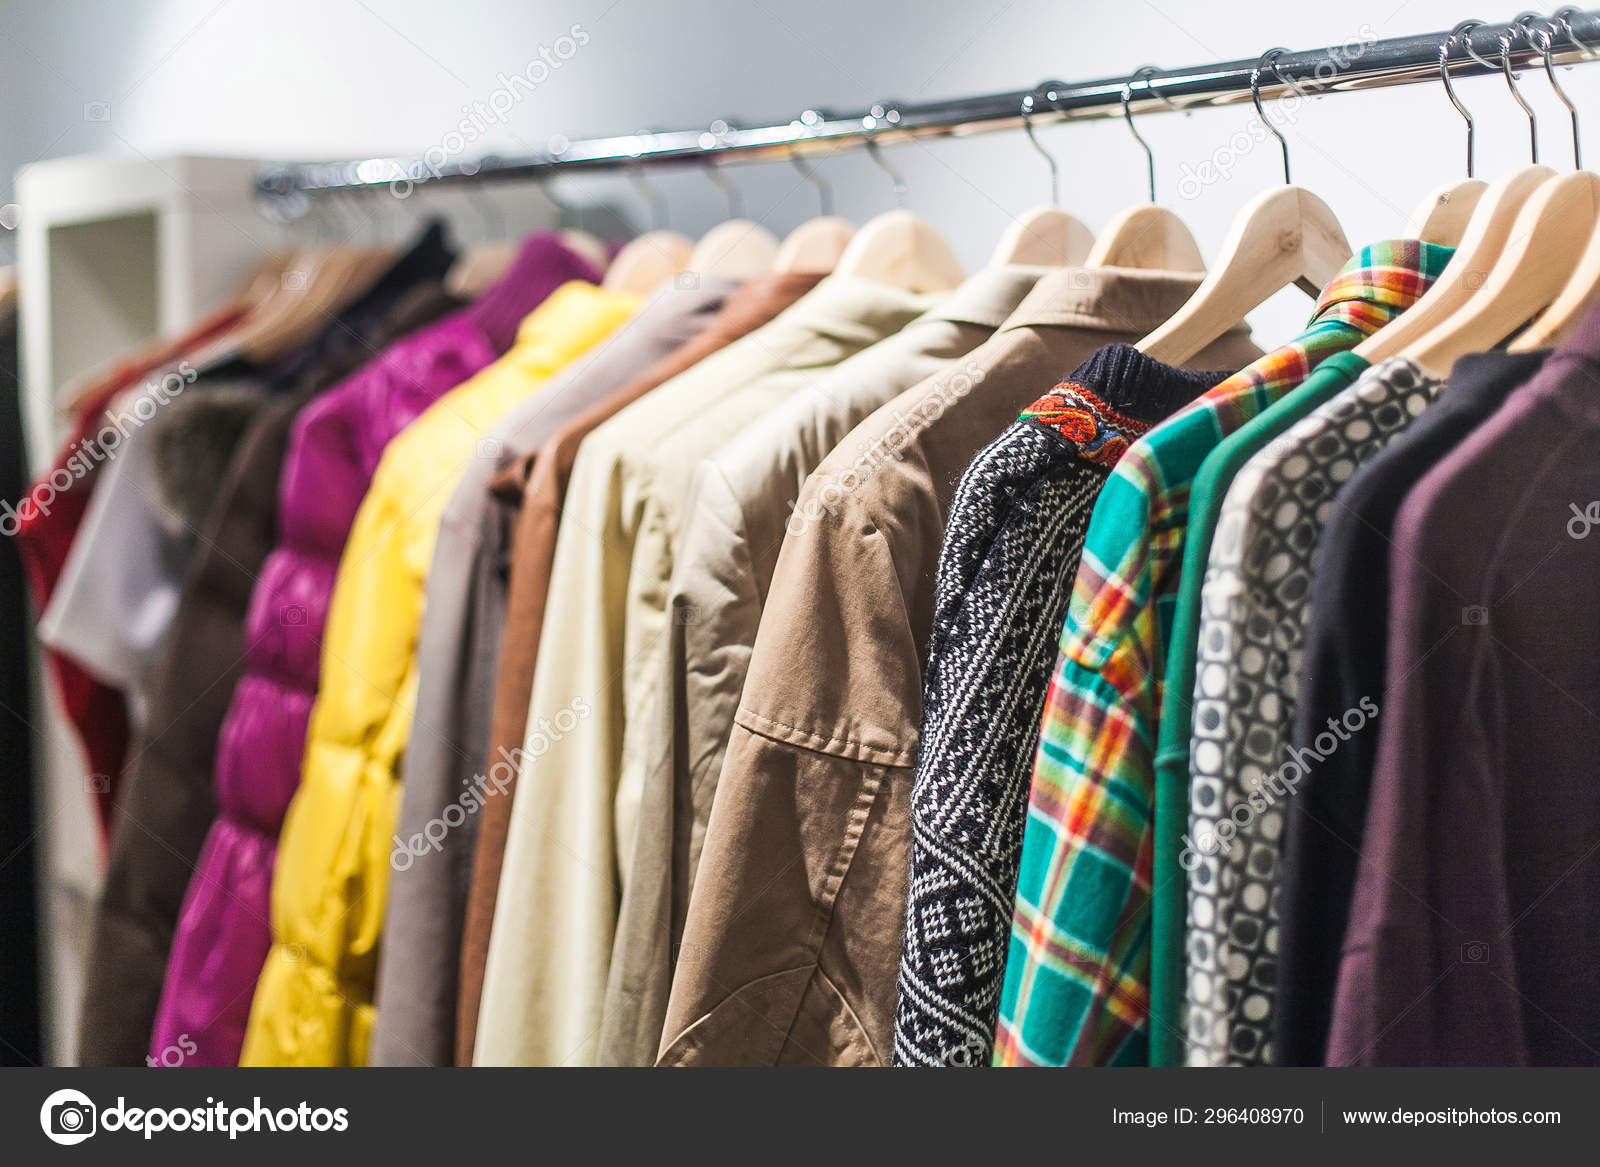 https://st4.depositphotos.com/18428194/29640/i/1600/depositphotos_296408970-stock-photo-colorful-selection-of-clothes-for.jpg